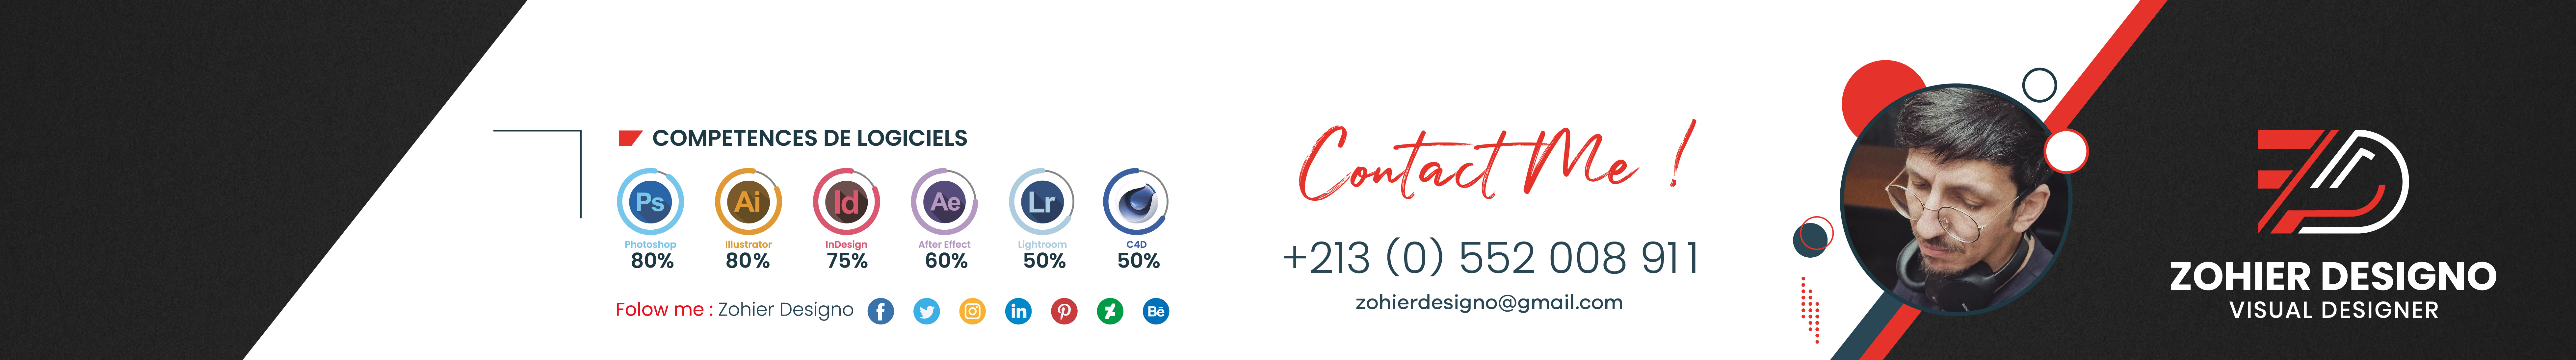 Banner de perfil de Zohier Designo